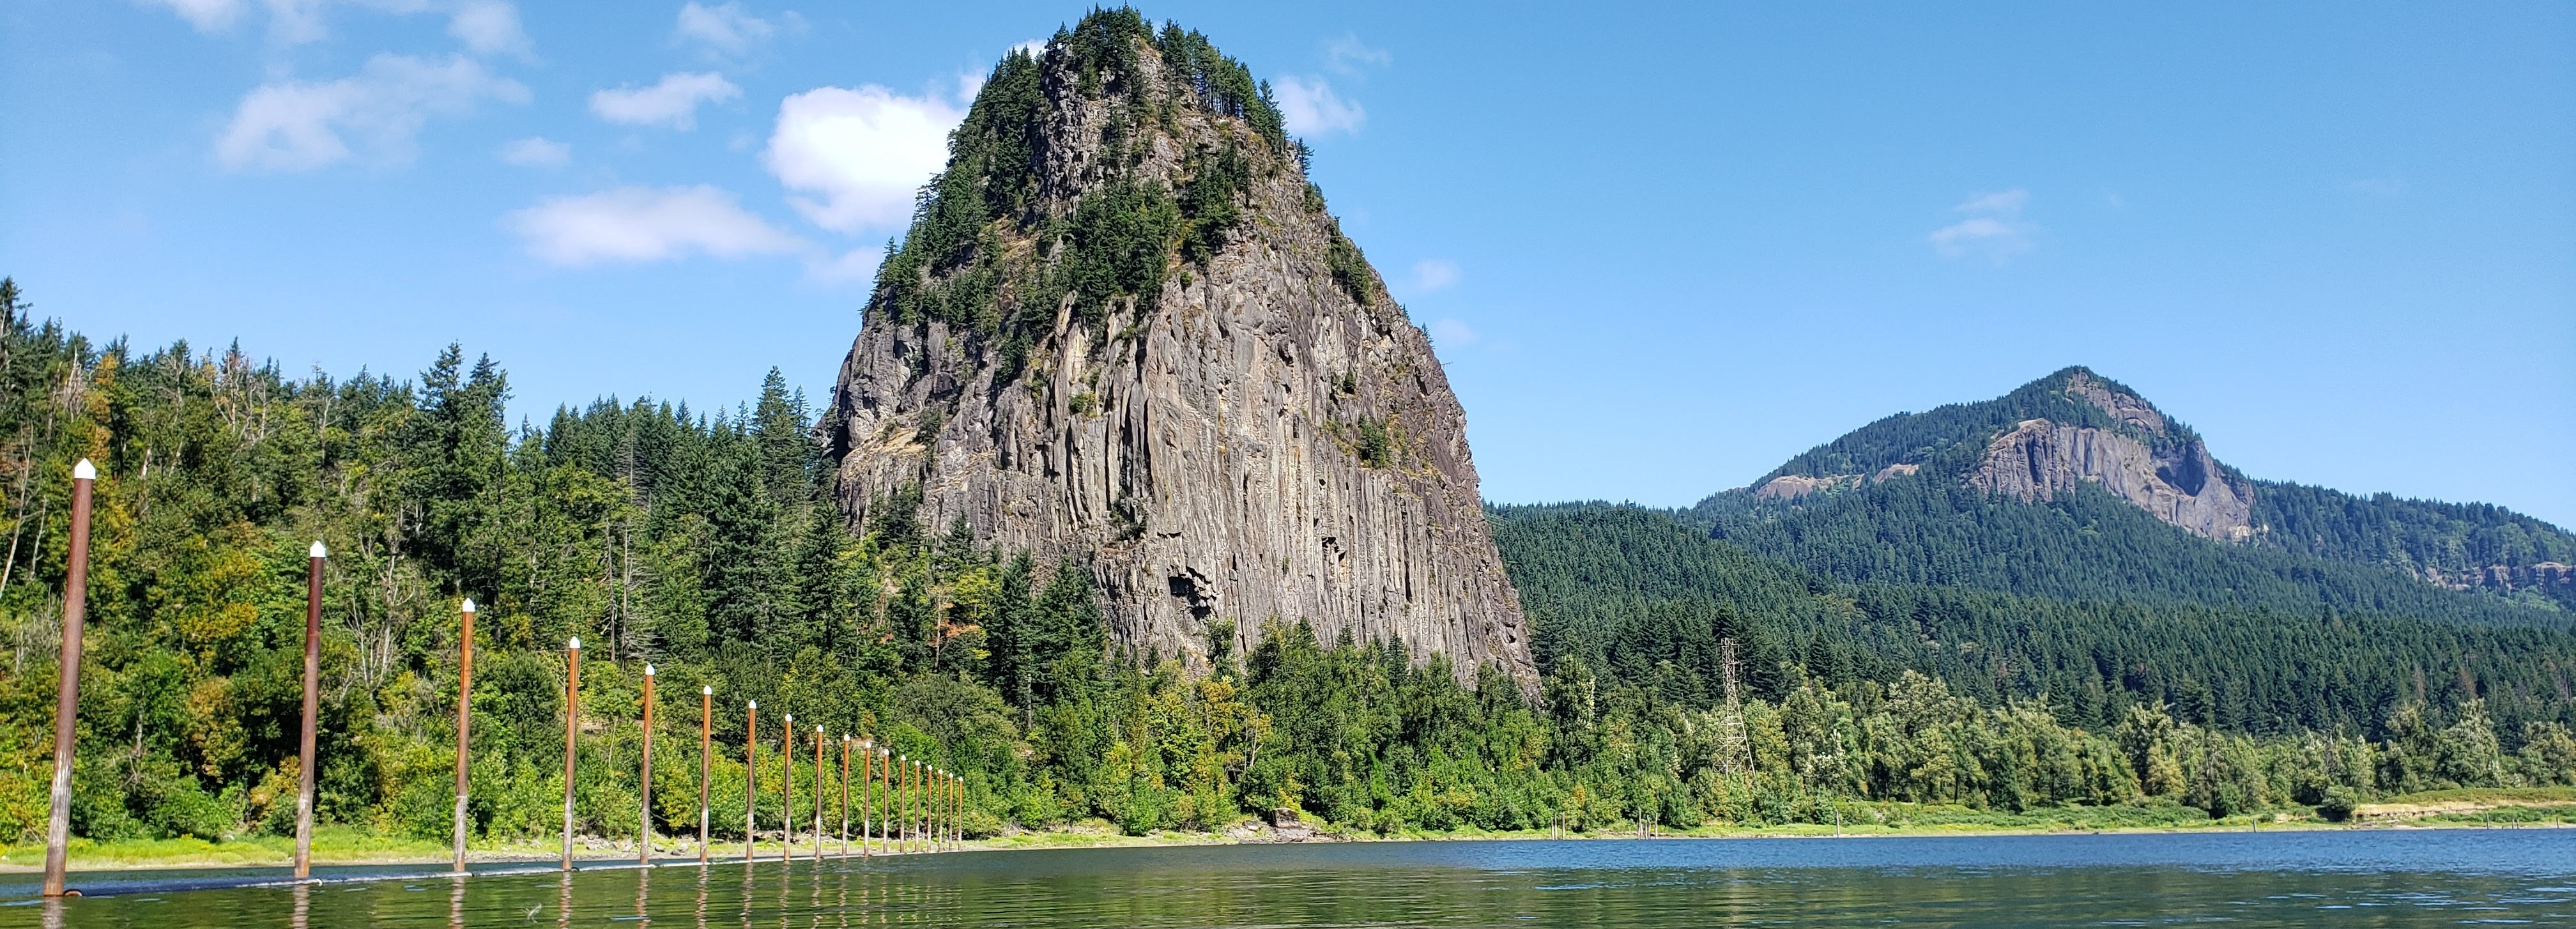 Washington's Top Columbia River Attractions